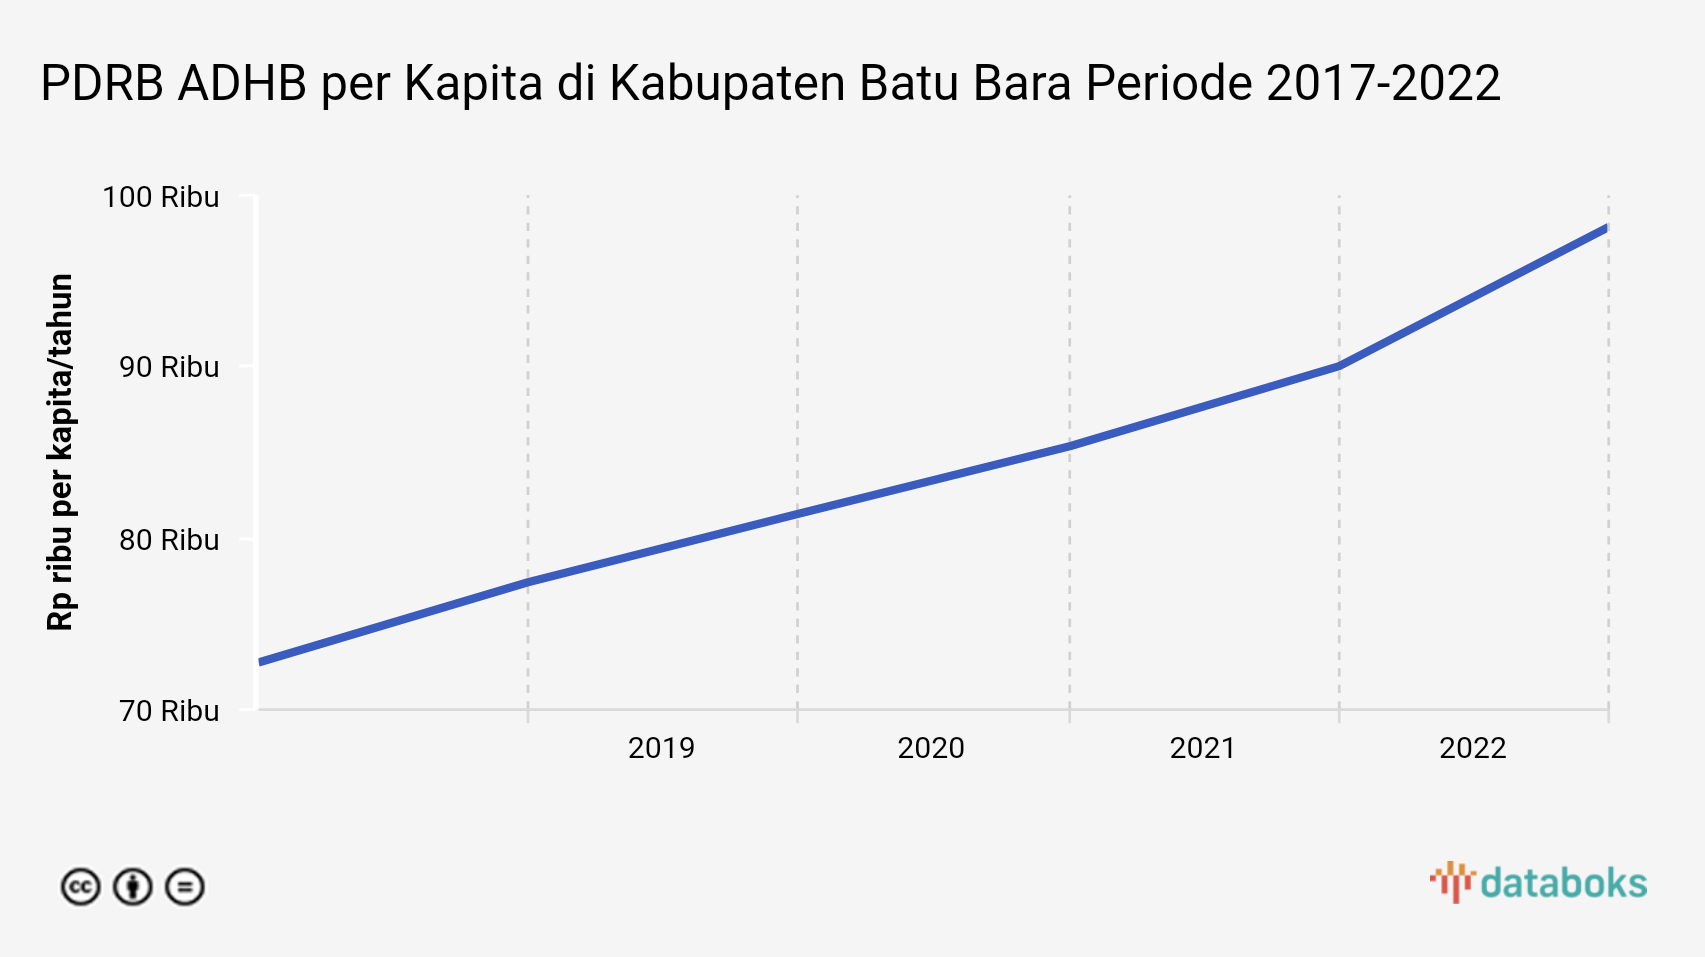 PDRB ADHB per Kapita Kabupaten Batu Bara Rp.98,15 Juta/Kapita/Tahun Data per 2022